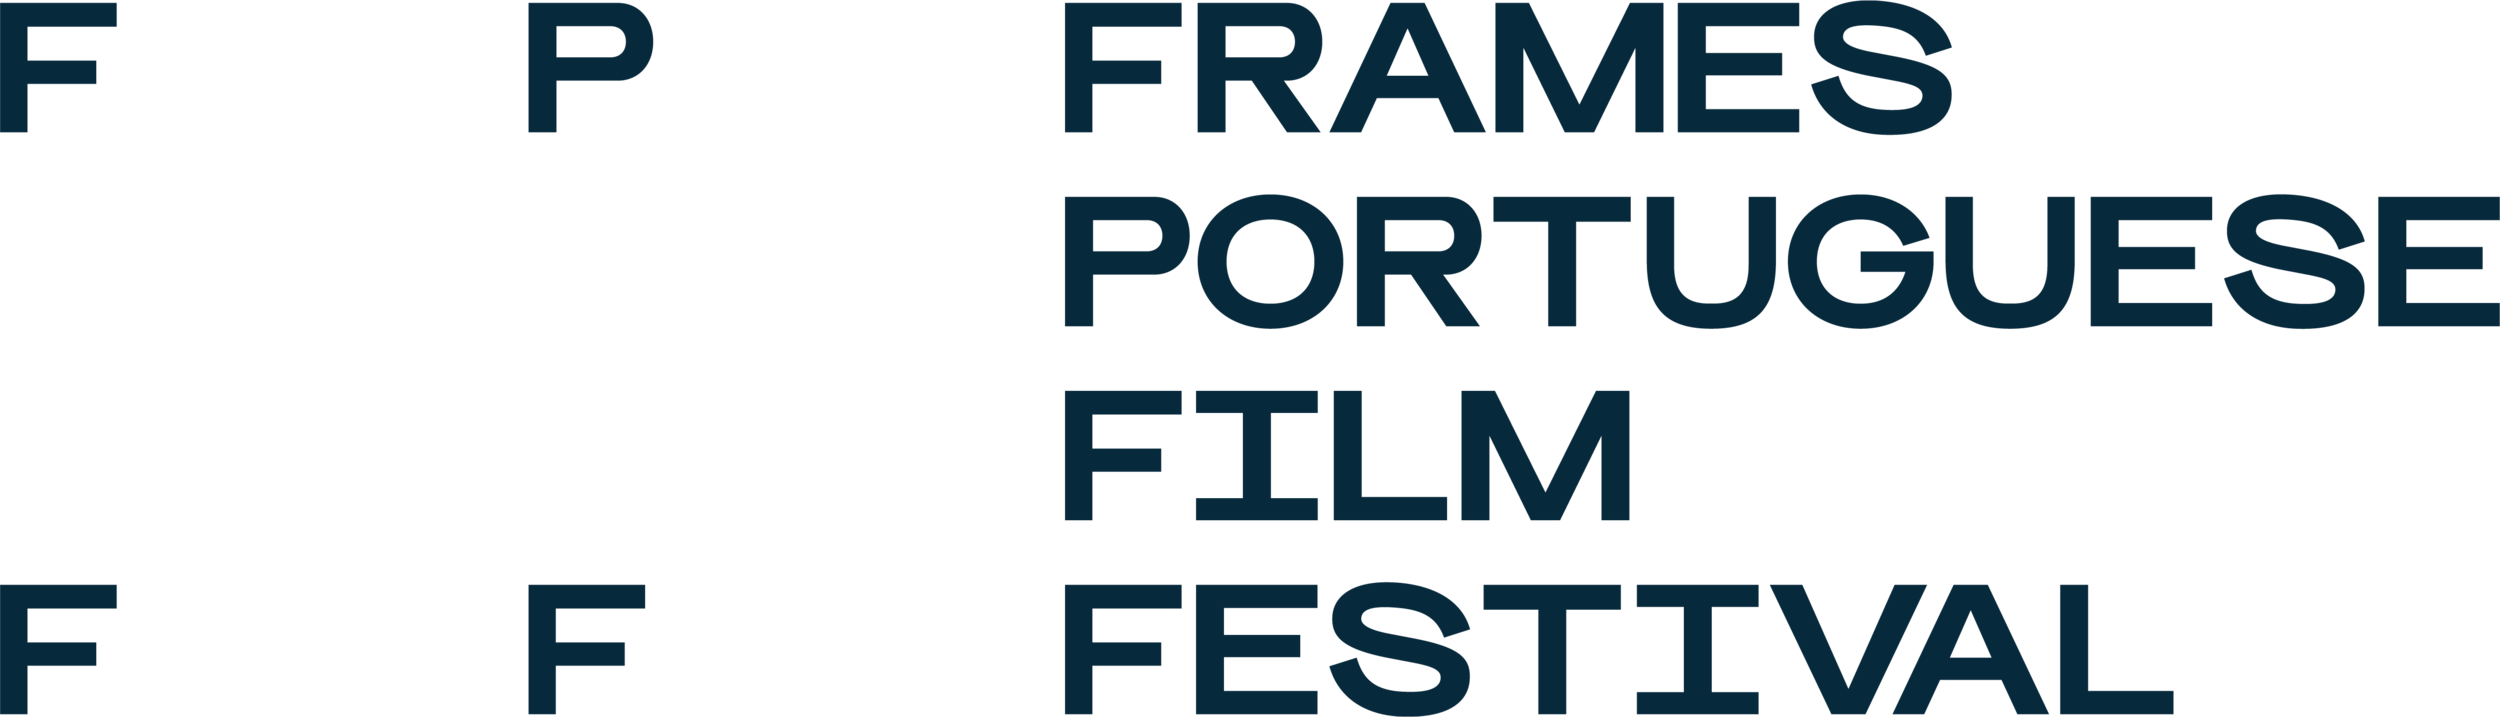 Frames - Portuguese Film Festival